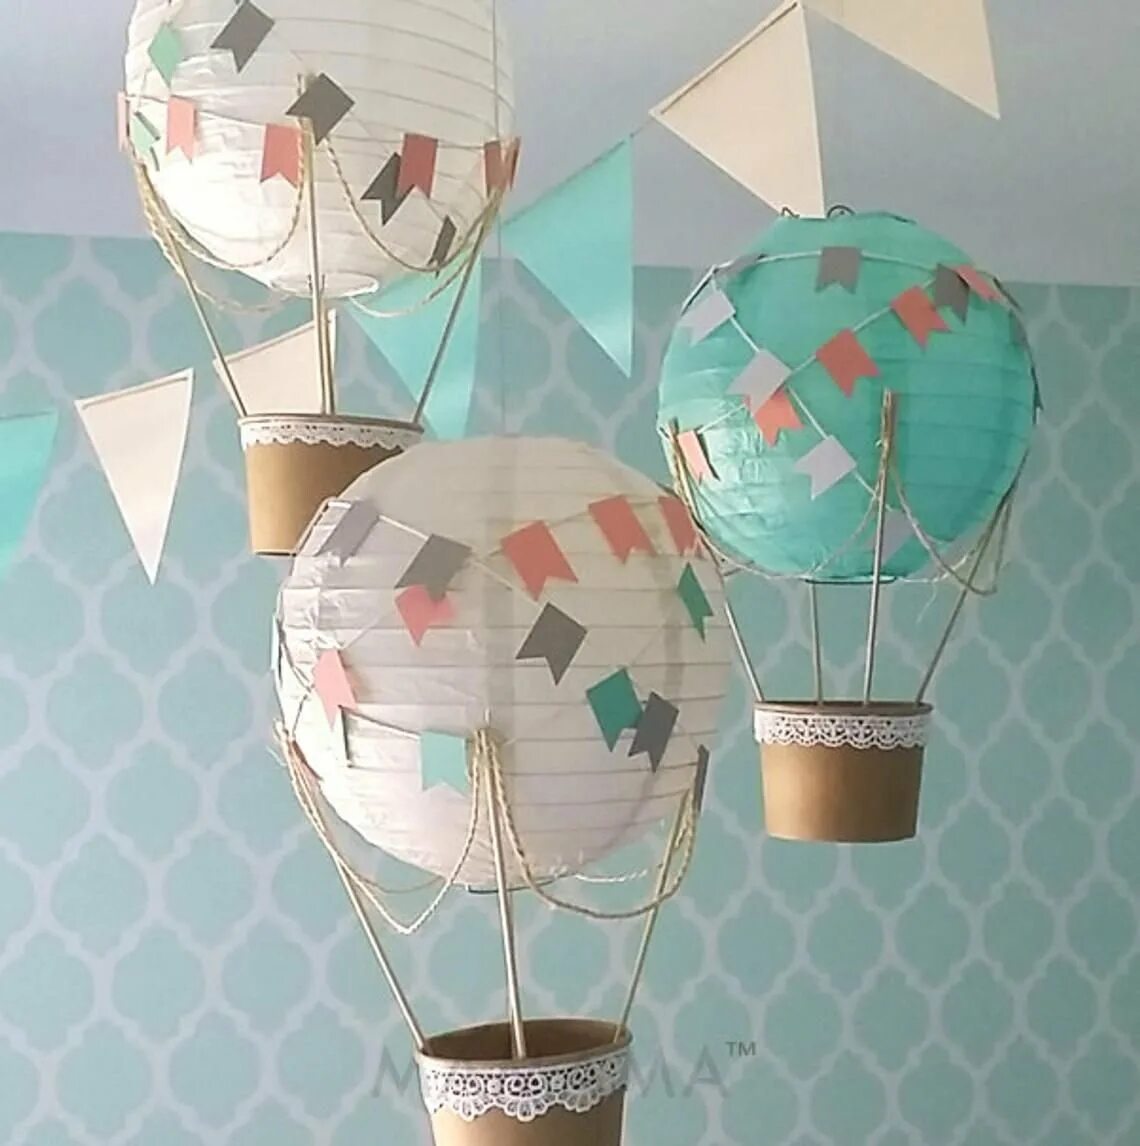 Мастер класс воздушный шар. Воздушный шар декорация. Воздушный шар с корзиной декор. Поделка воздушный шар с корзиной. Фотозона воздушный шар с корзиной.